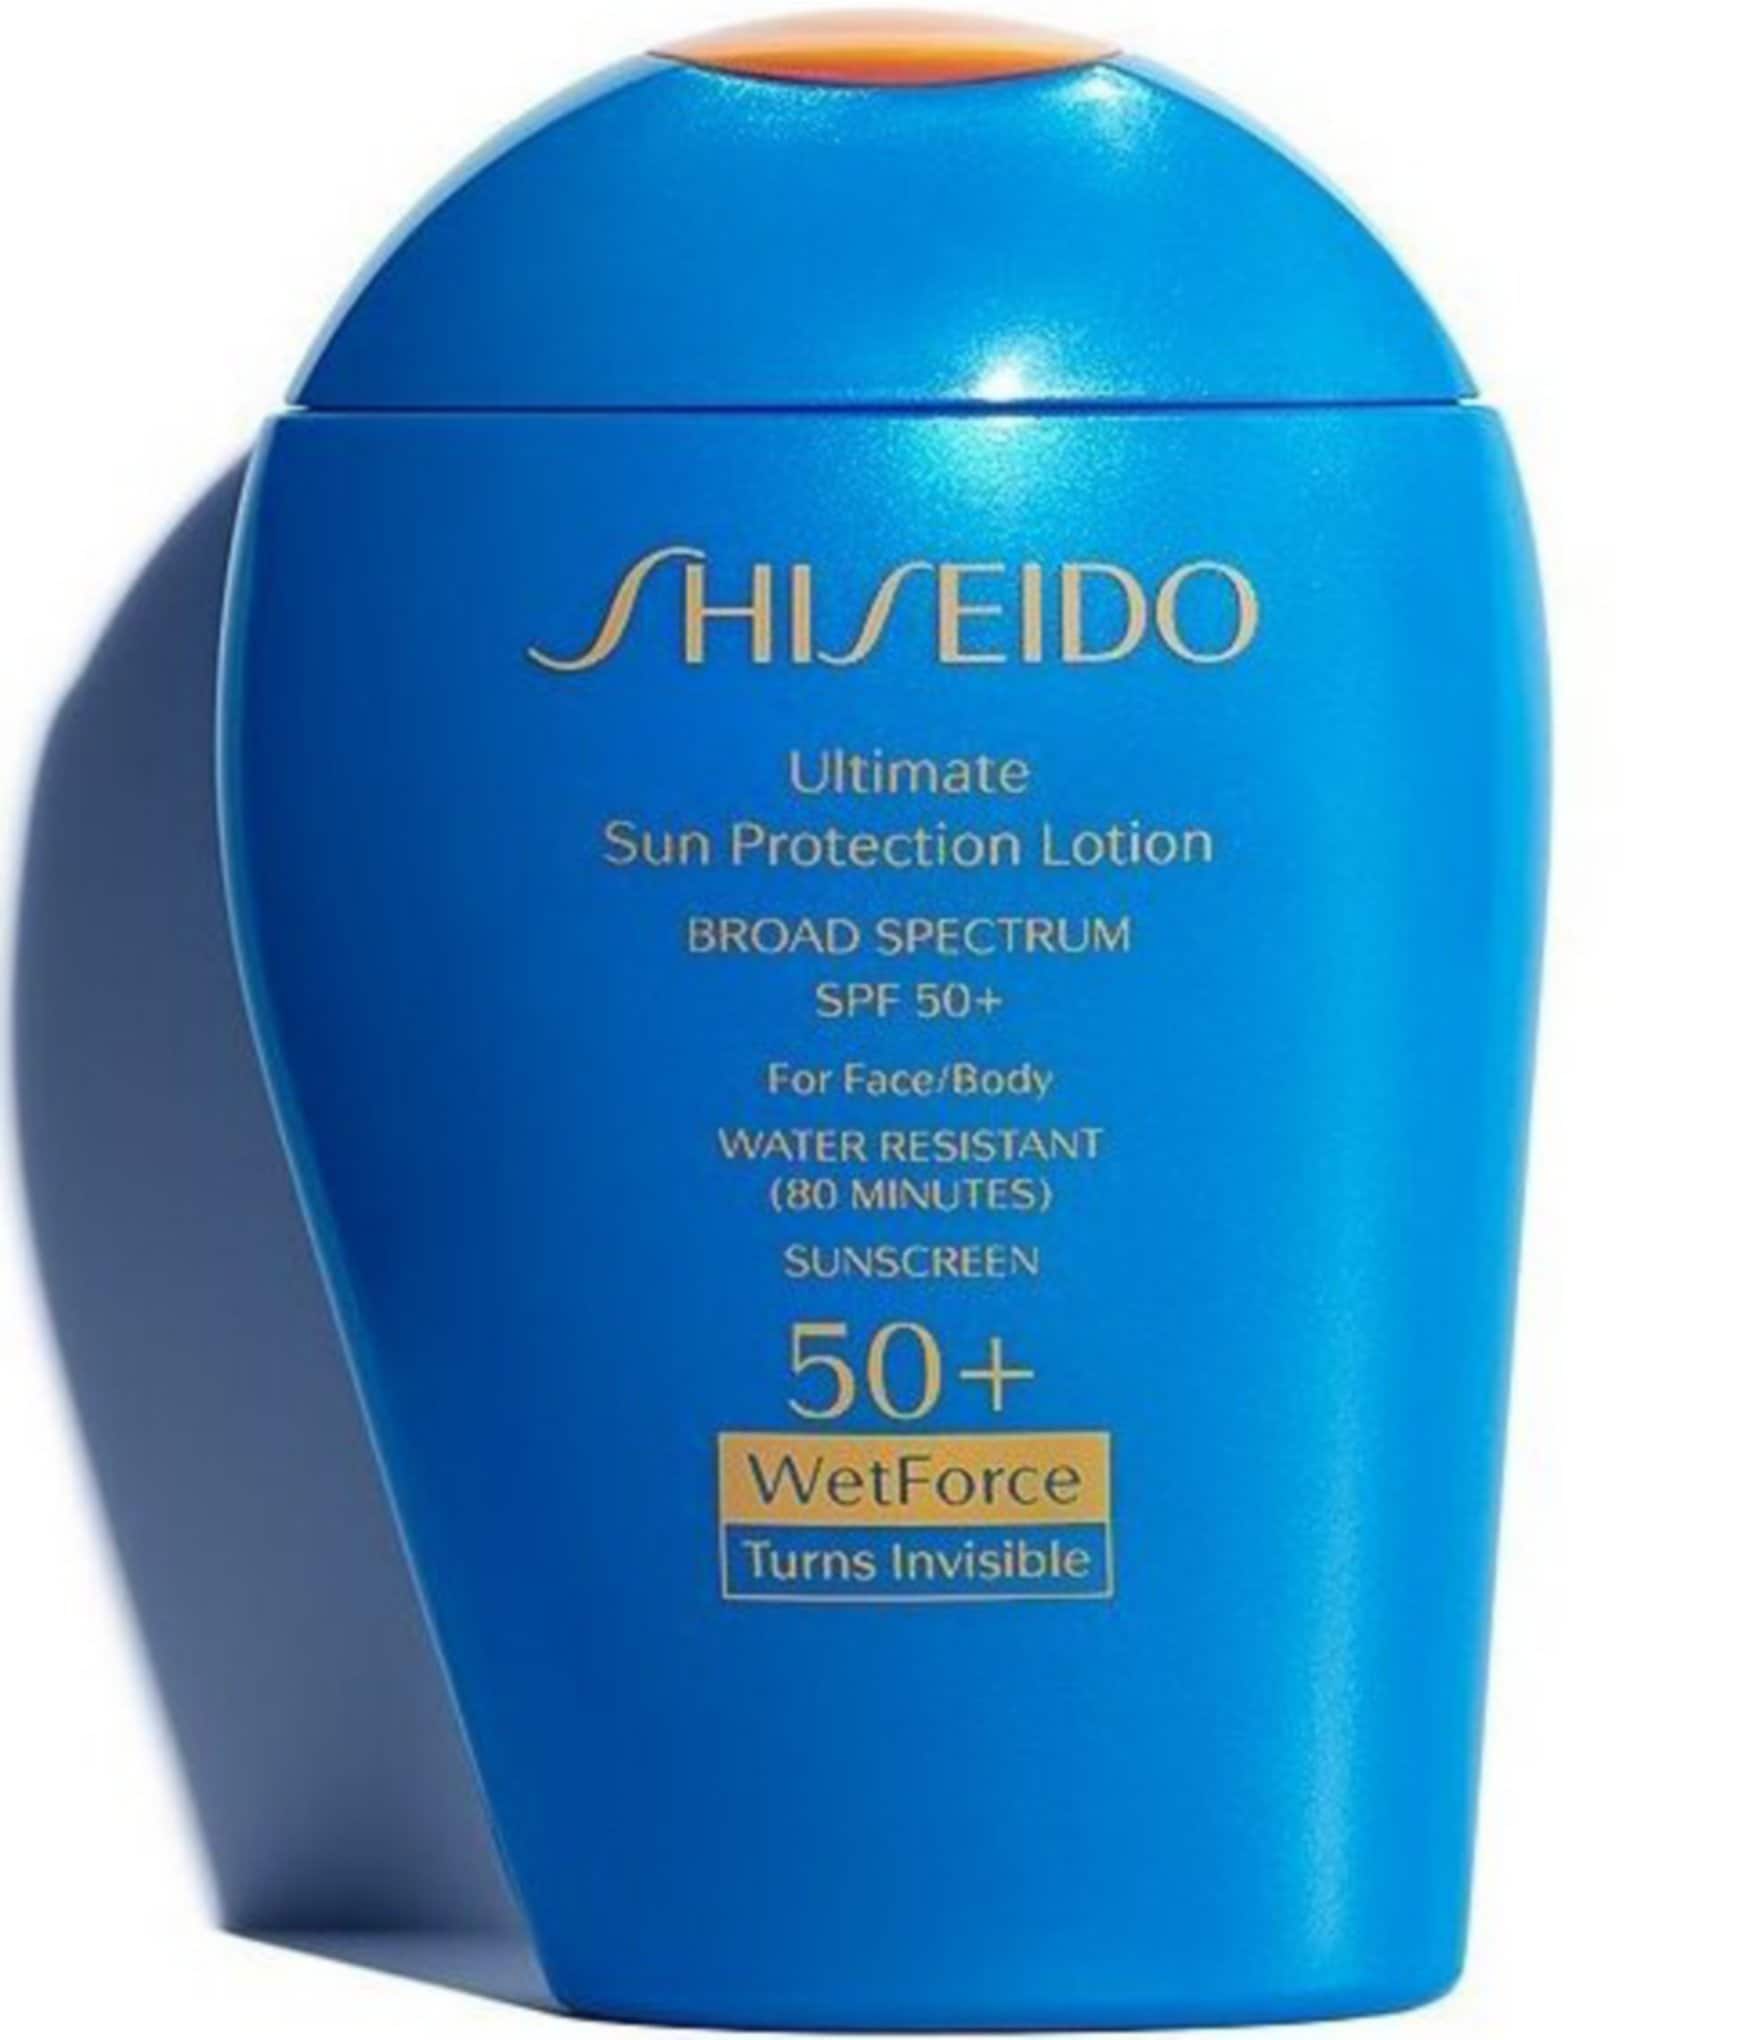 Shiseido Sunscreen. Shiseido Expert Sun Protection Lotion.